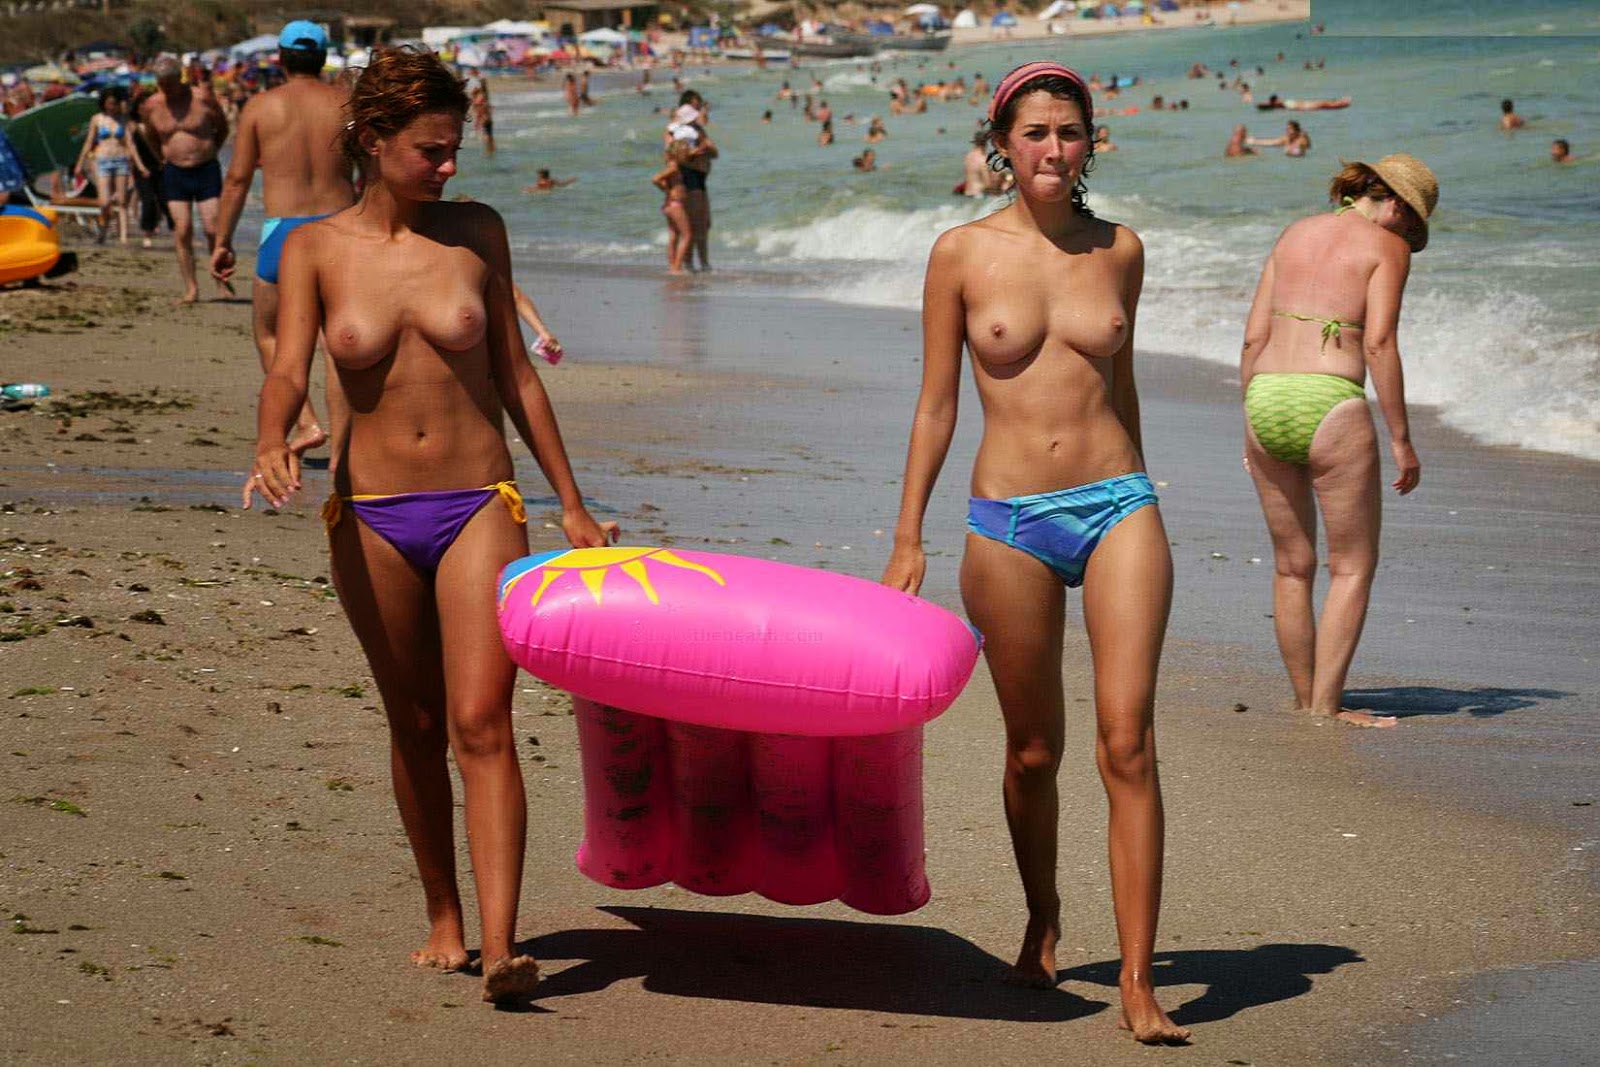 Where is nude beach located Domina Handjob â€“ Texansprosale